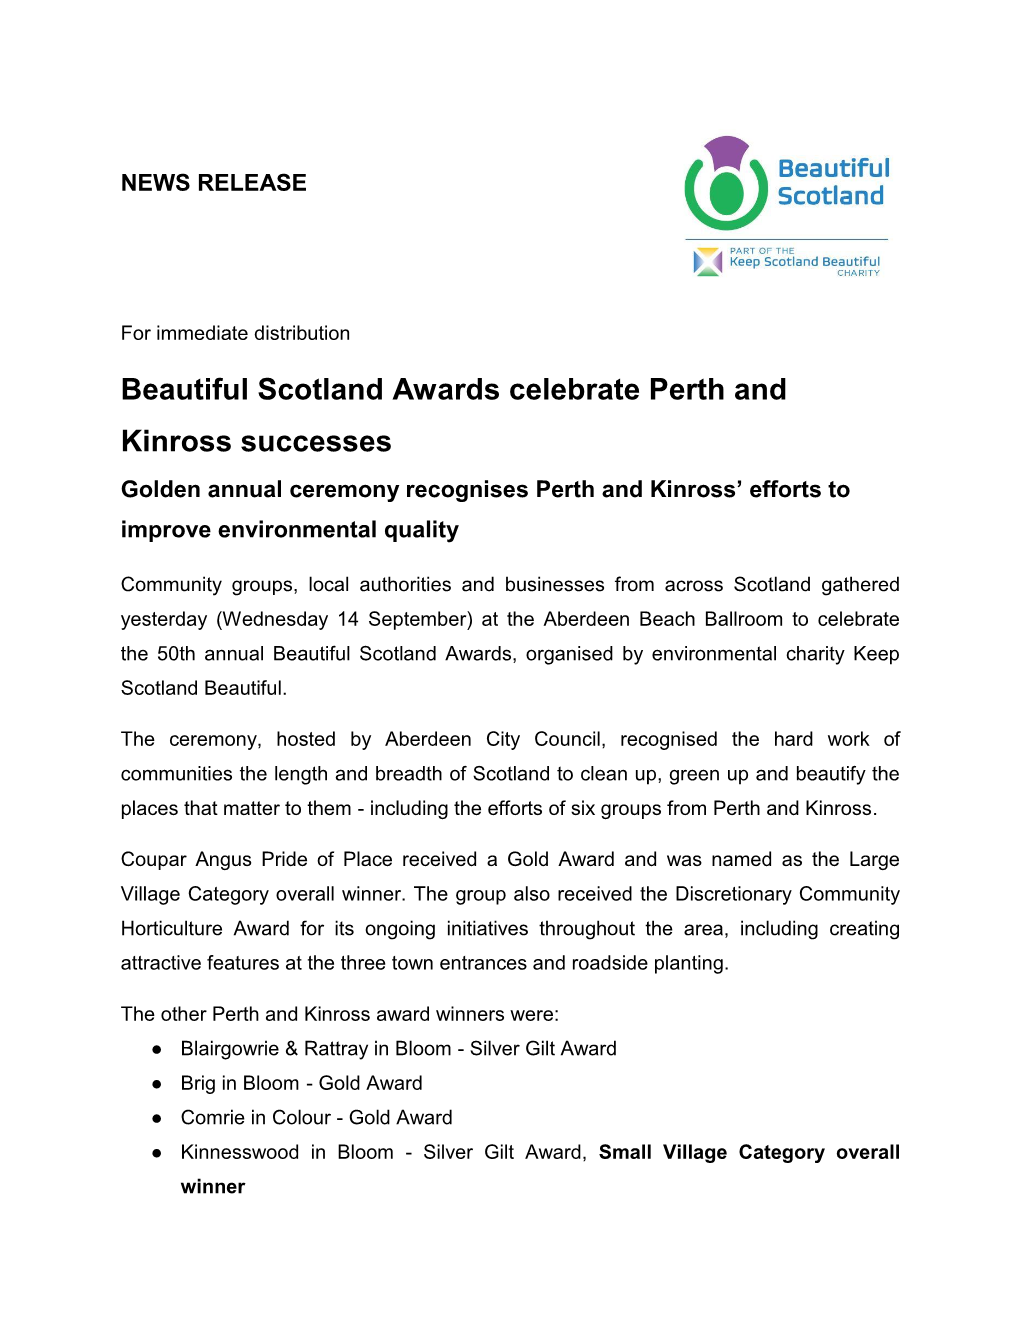 Beautiful Scotland Awards Celebrate Perth and Kinross Successes